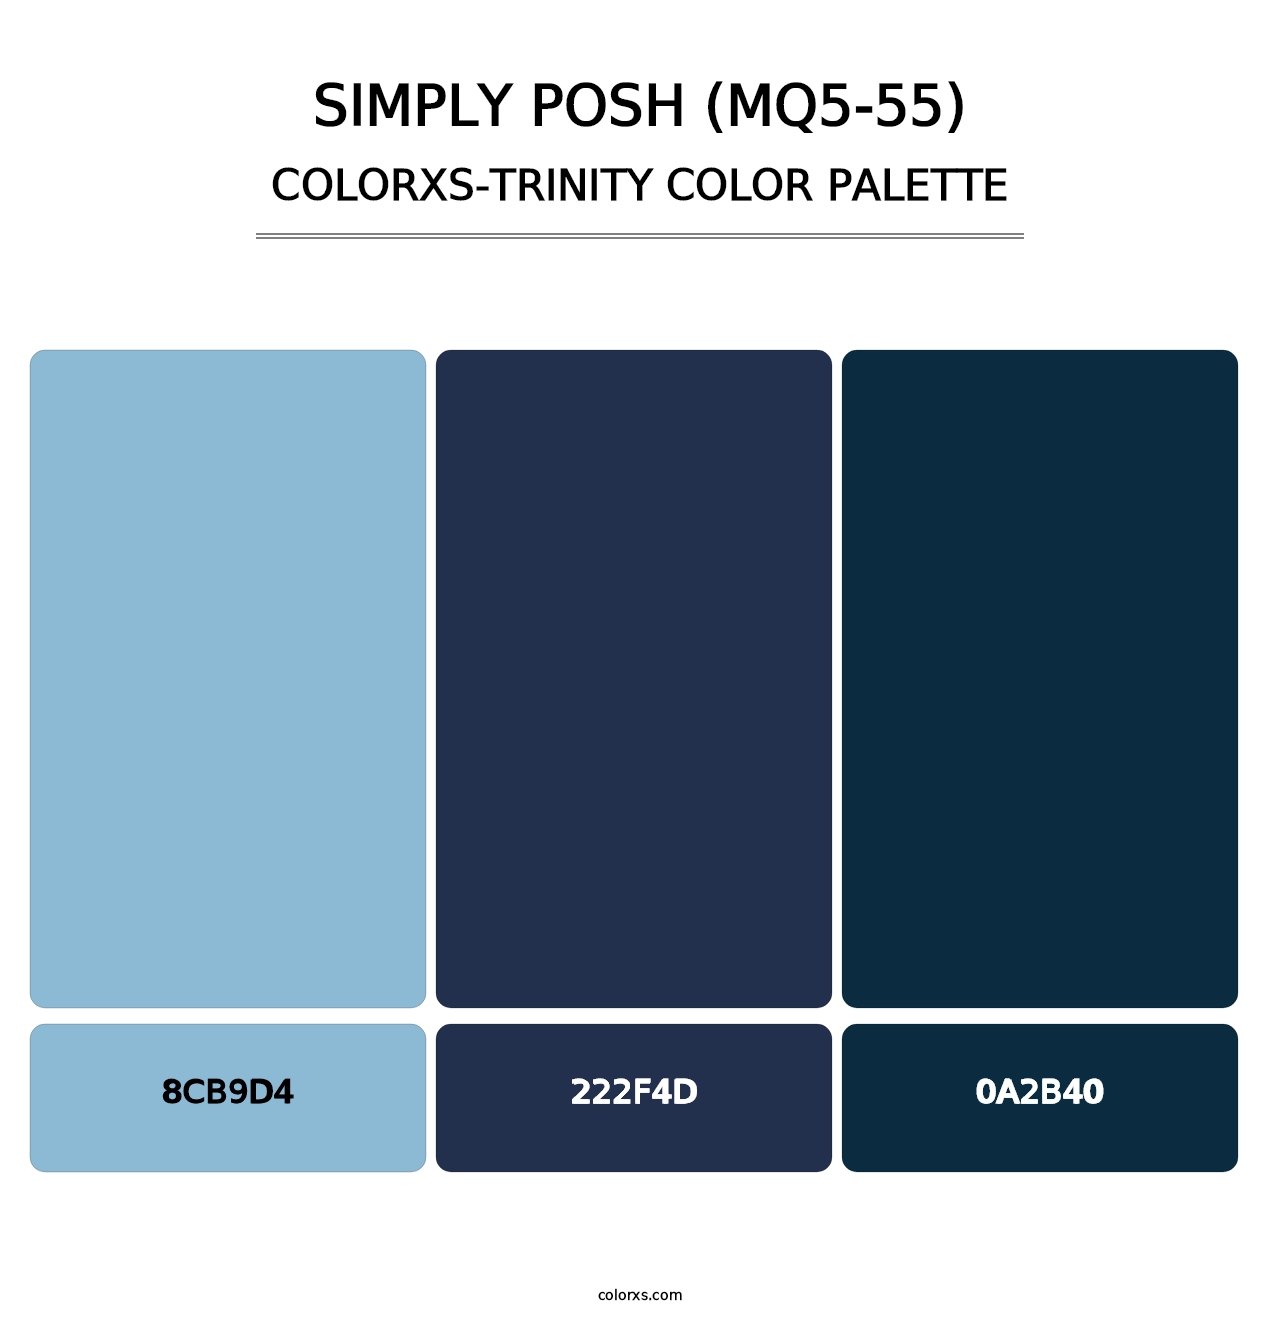 Simply Posh (MQ5-55) - Colorxs Trinity Palette